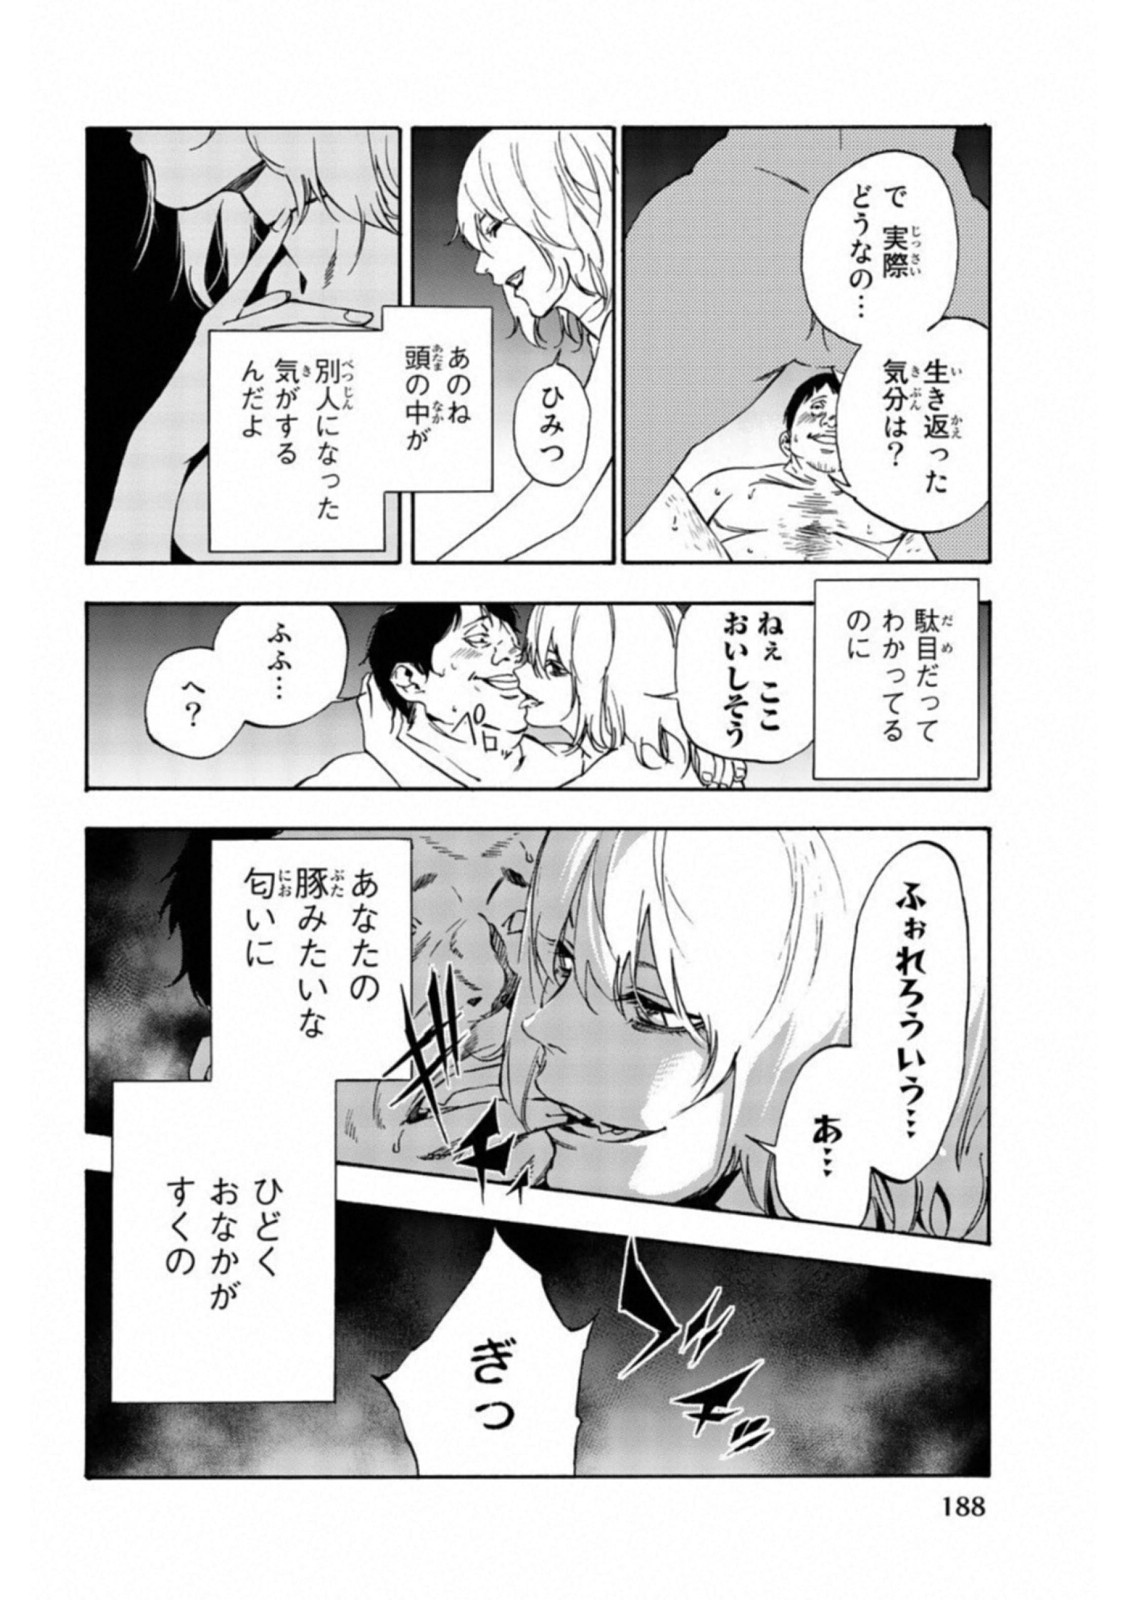 Zetsubou no Rakuen - Chapter 43.2 - Page 3